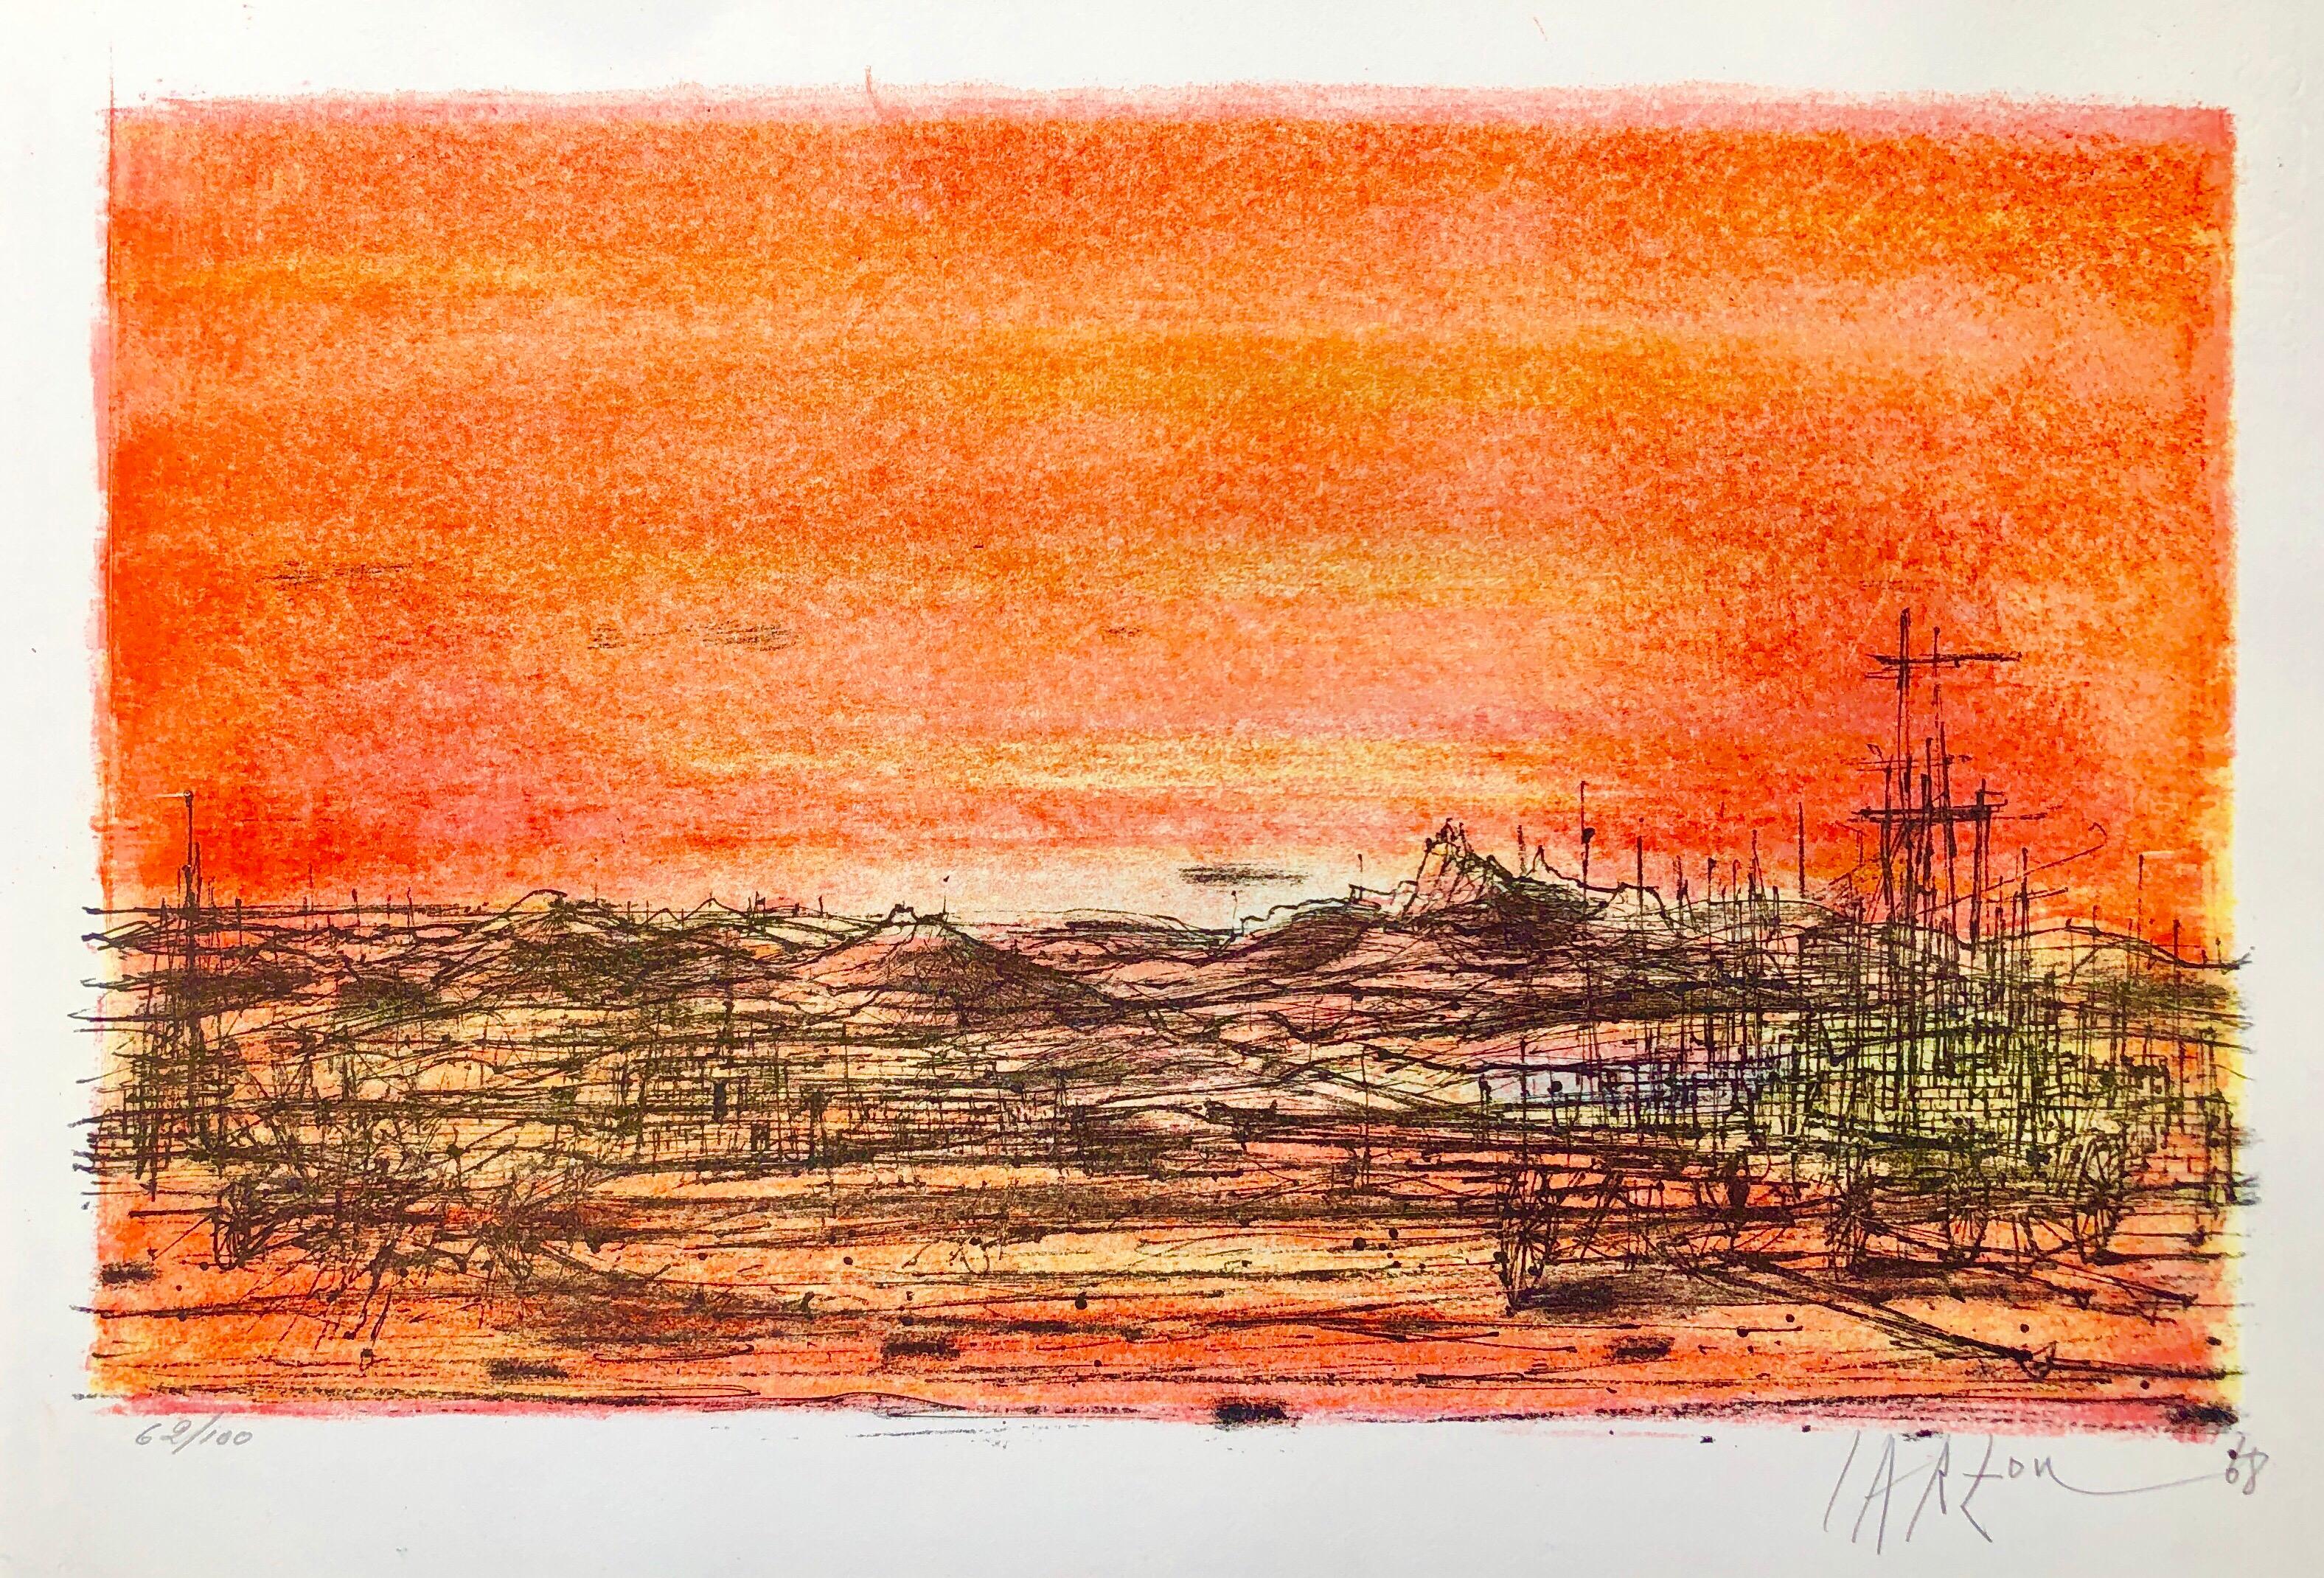 Abstract Print Jean Carzou - Lithographie moderniste française Carzou couleur volcan orange flamboyant, 1968